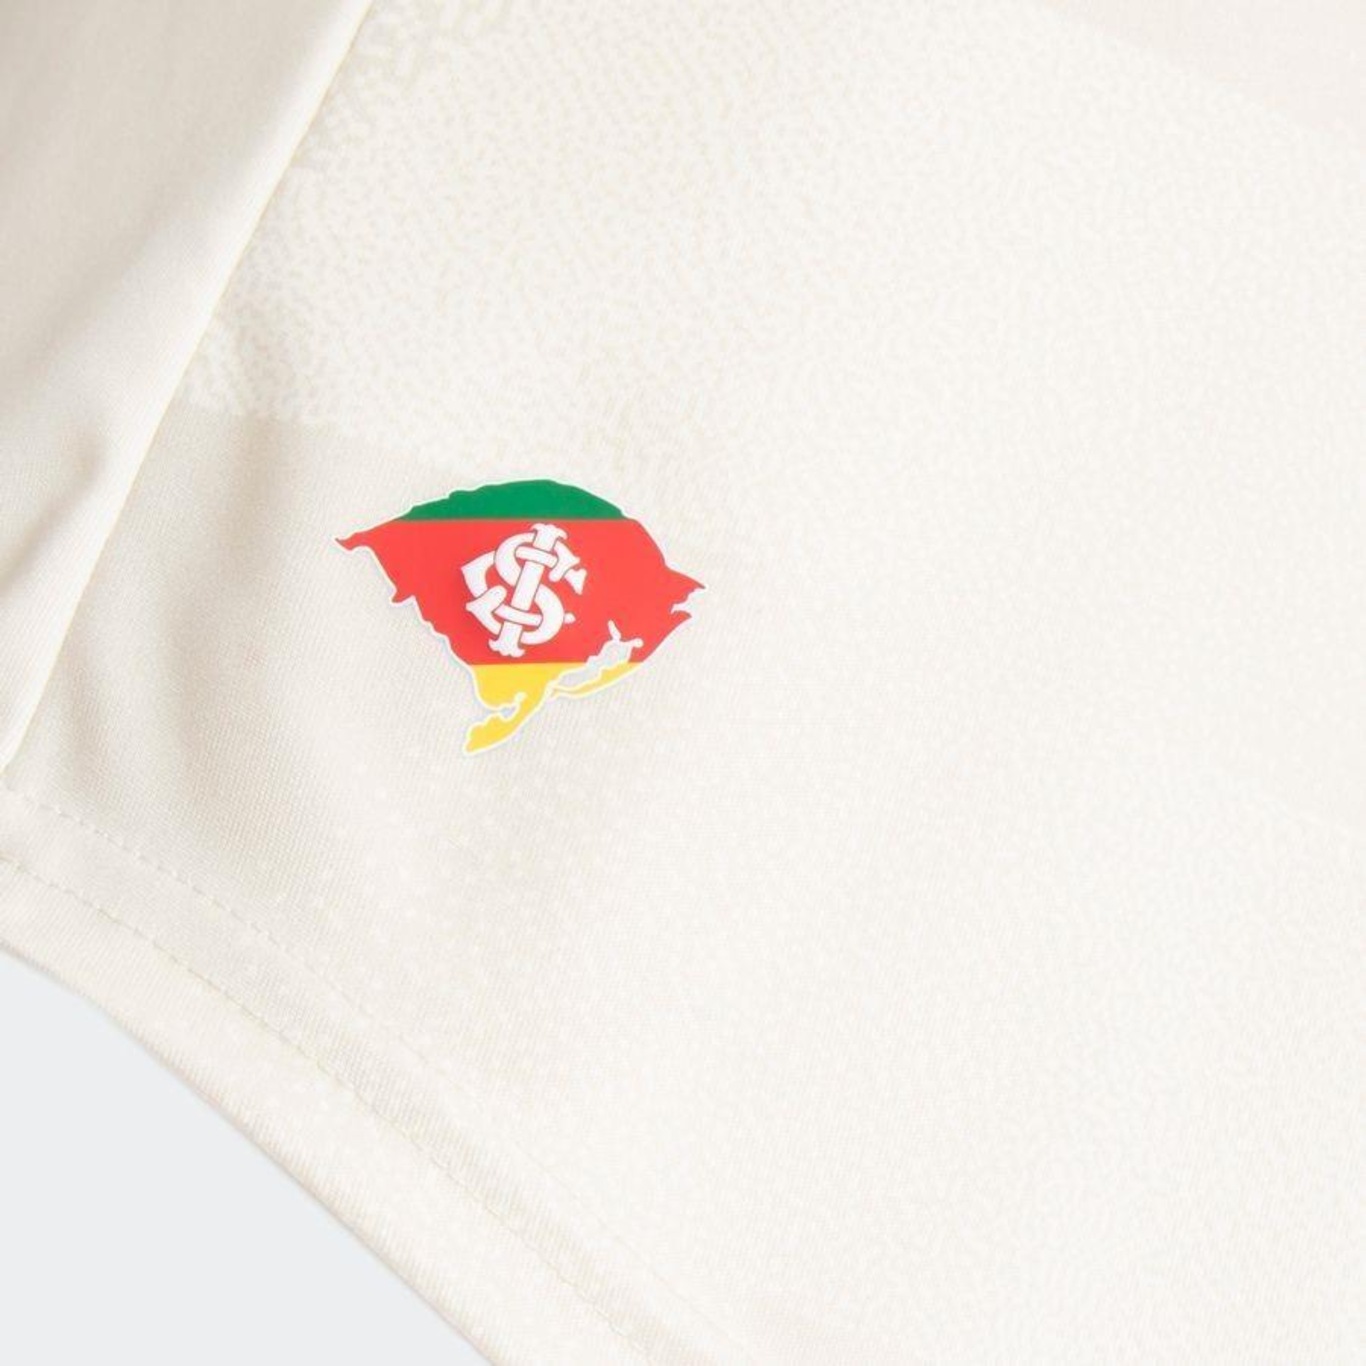 Camisa Adidas Internacional II Feminino HS5335 - Vermelho/Branco